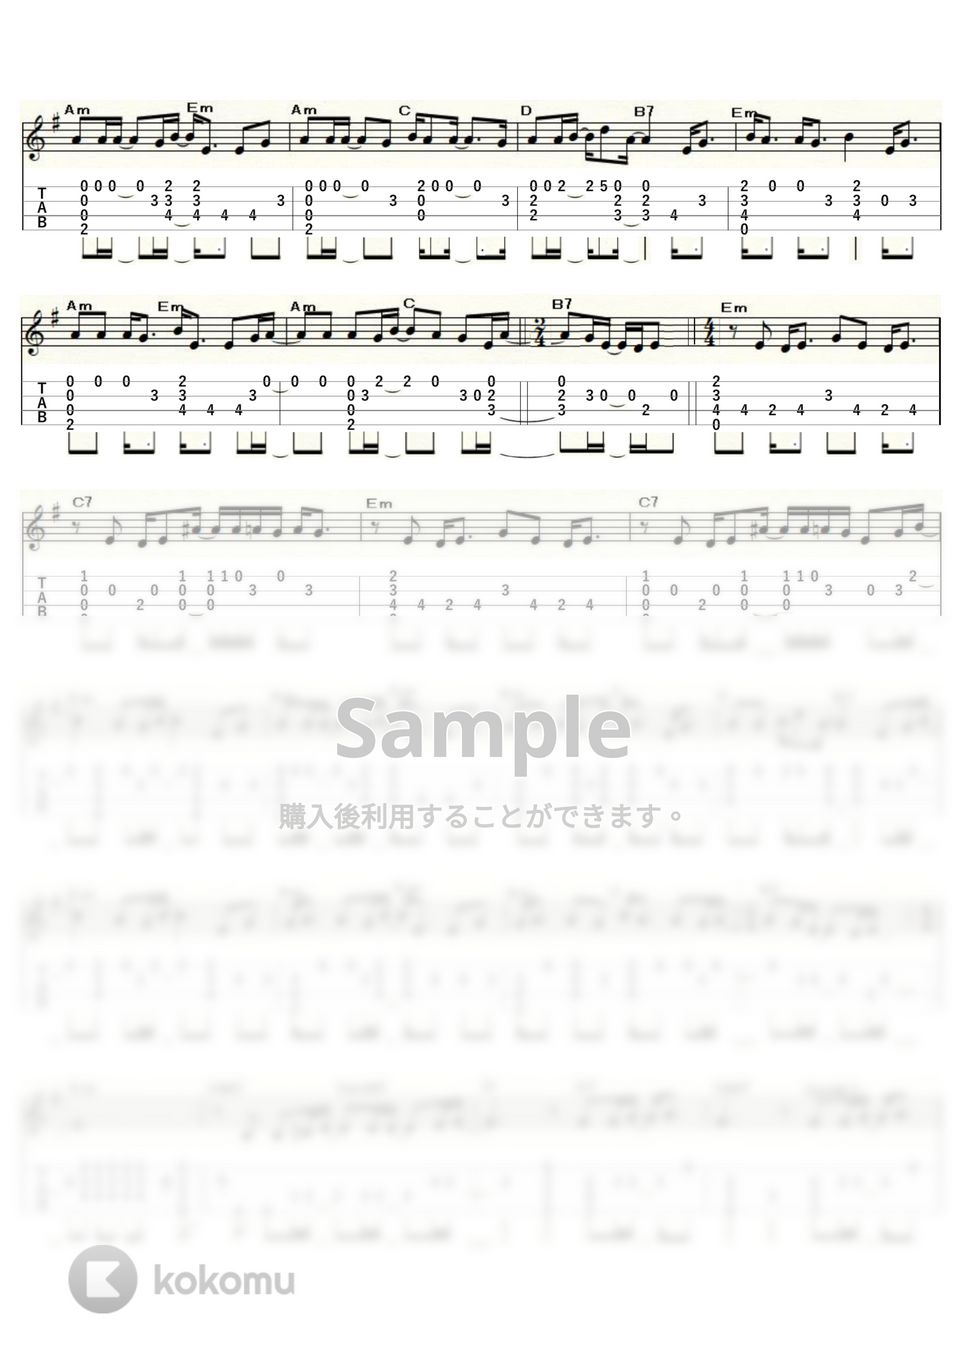 Billy Joel - The Stranger (ｳｸﾚﾚｿﾛ / Low-G / 中級～上級) by ukulelepapa